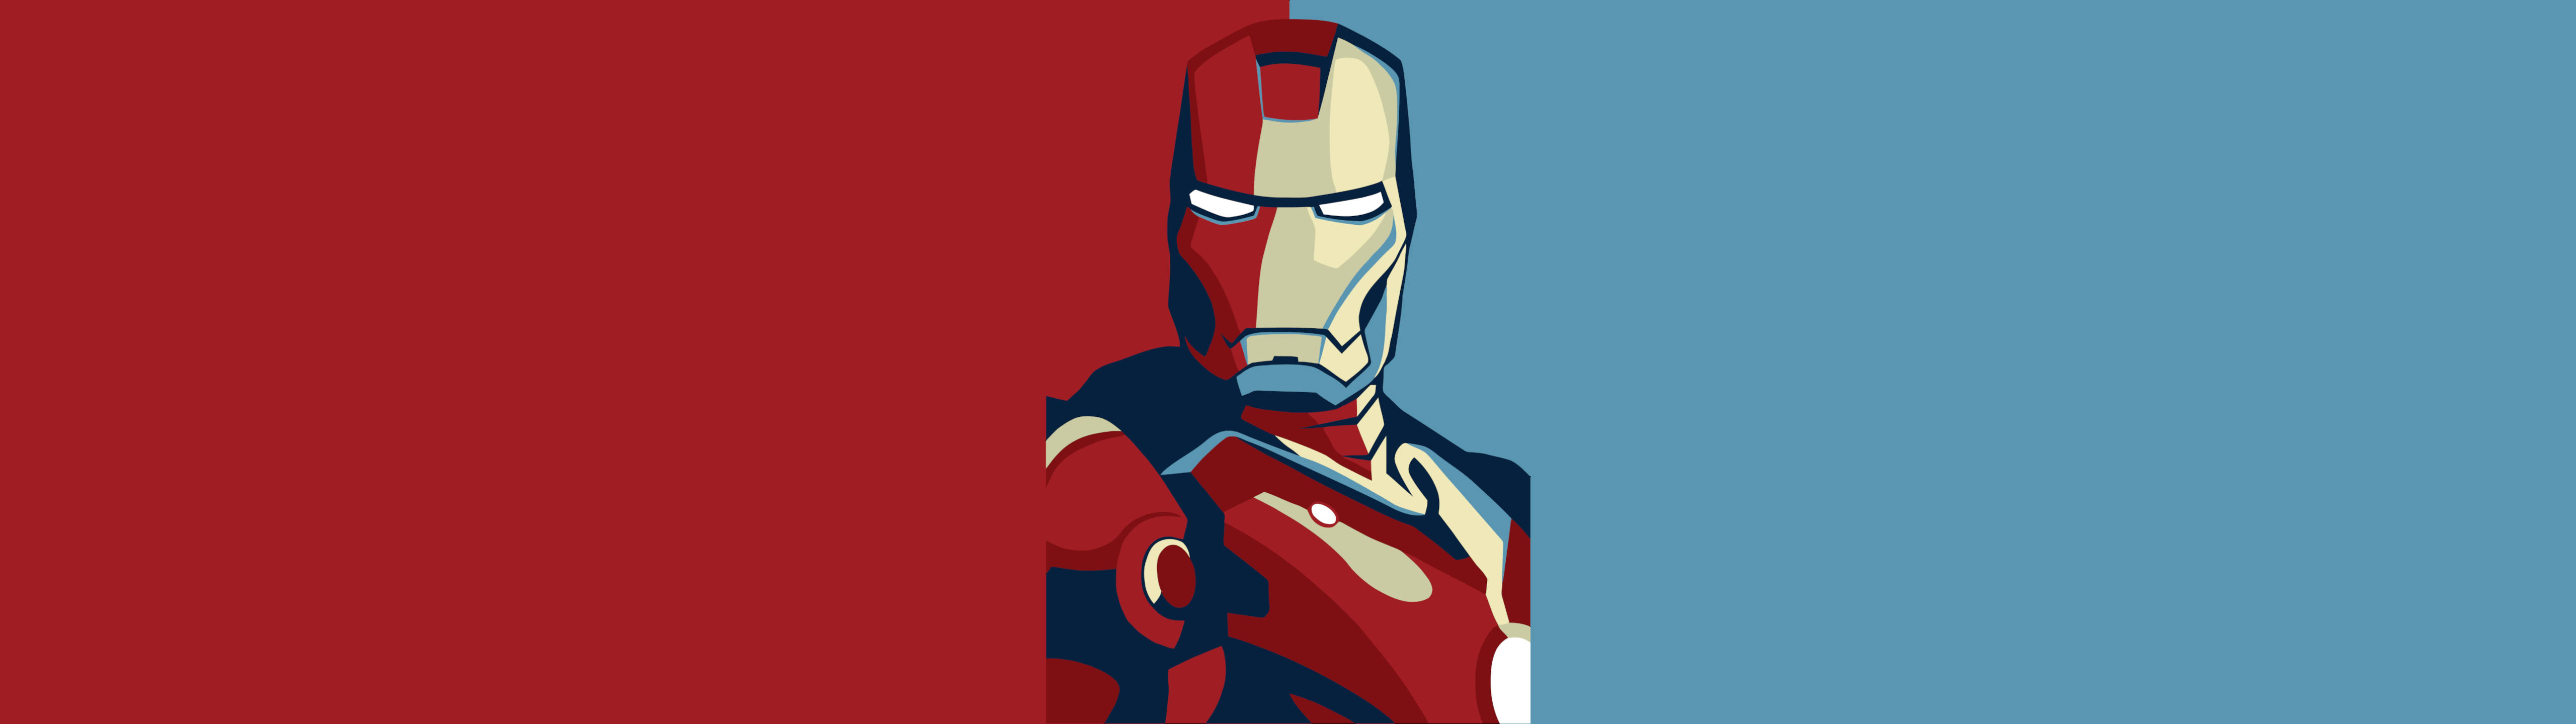 Marvel Hero Ironman 5120 X 1440 Wallpaper